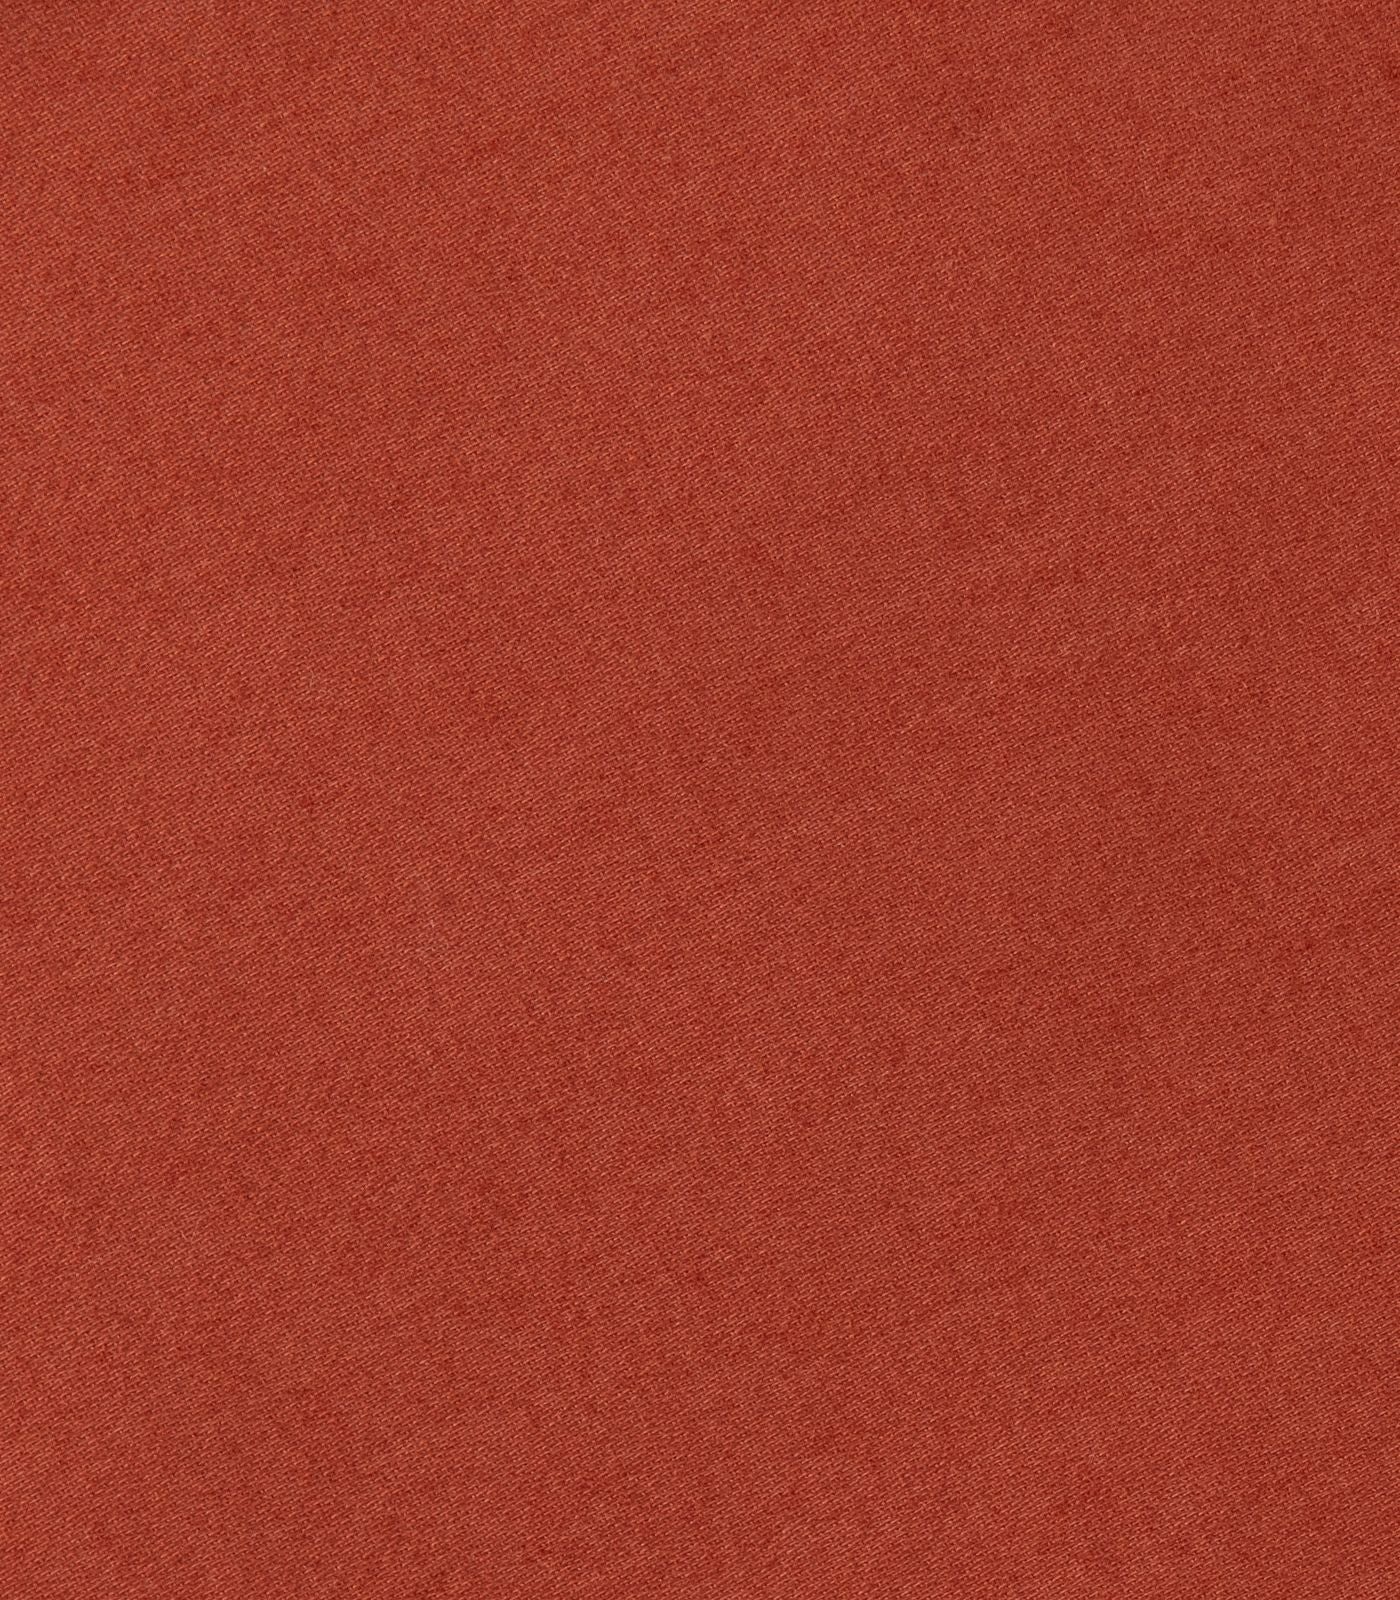 Bhumi Organic Cotton - Flat - Sateen Sheet - Rust